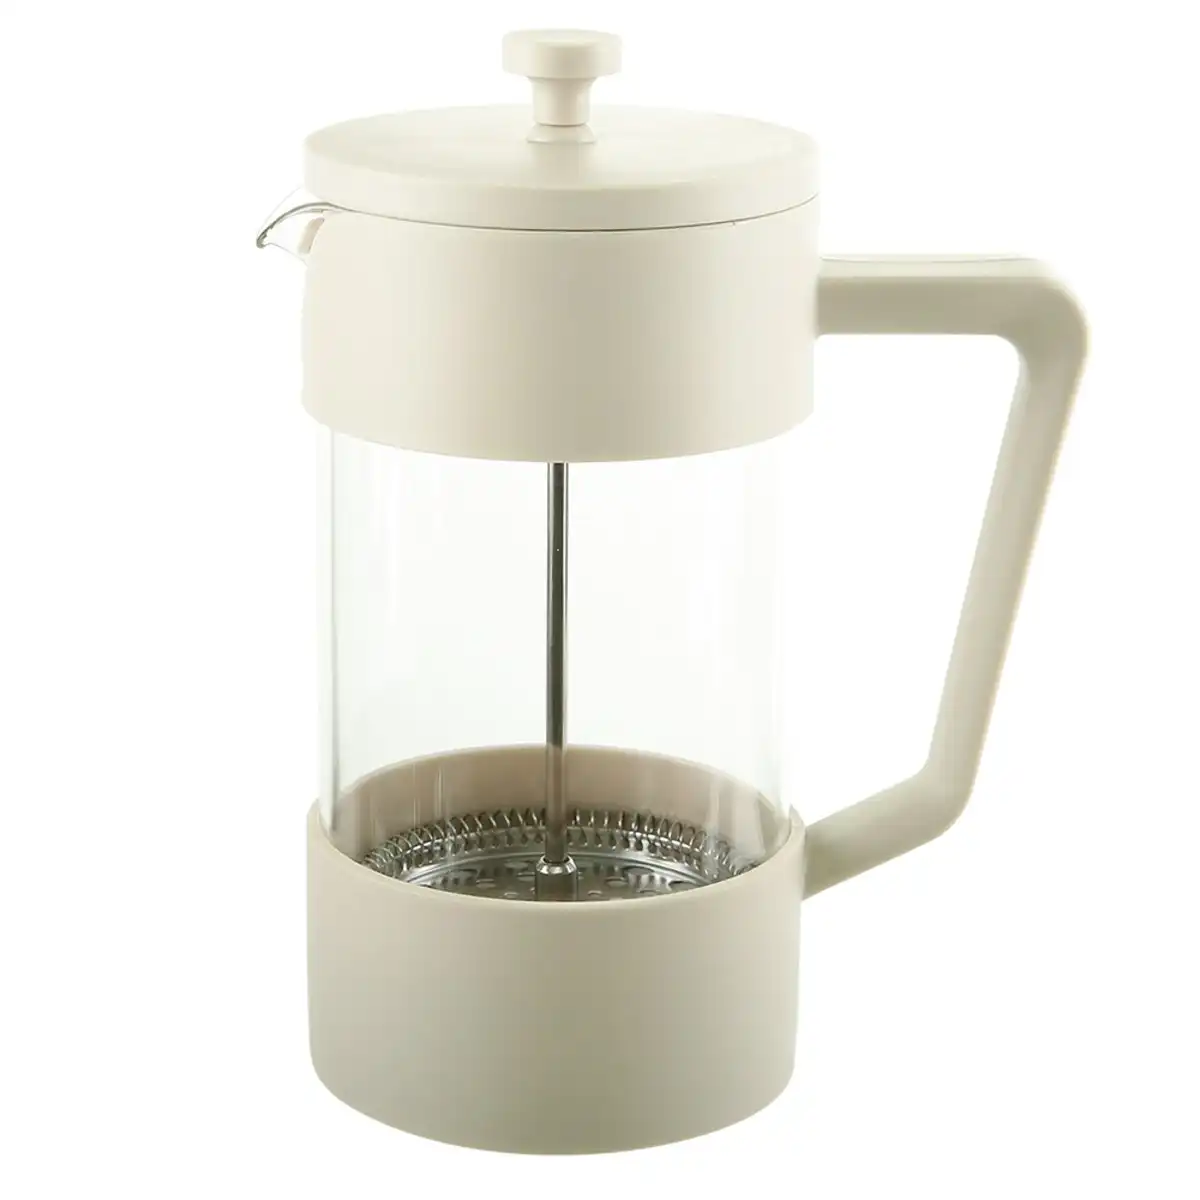 CASABARISTA OSLO COFFEE PLUNGER 3 CUP 350ml - CREAM